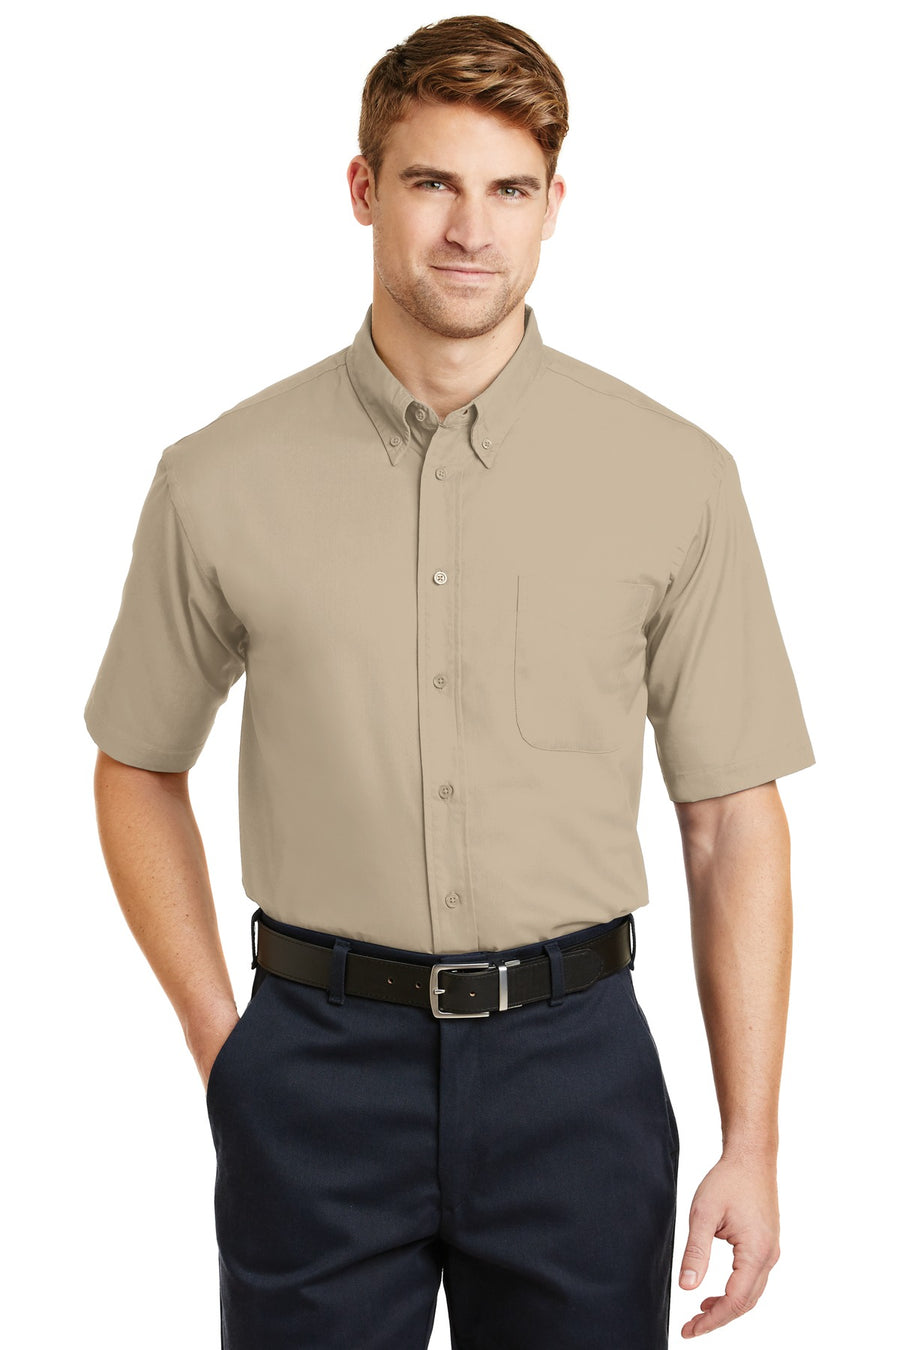 CornerStone - Short Sleeve SuperPro Twill Shirt.